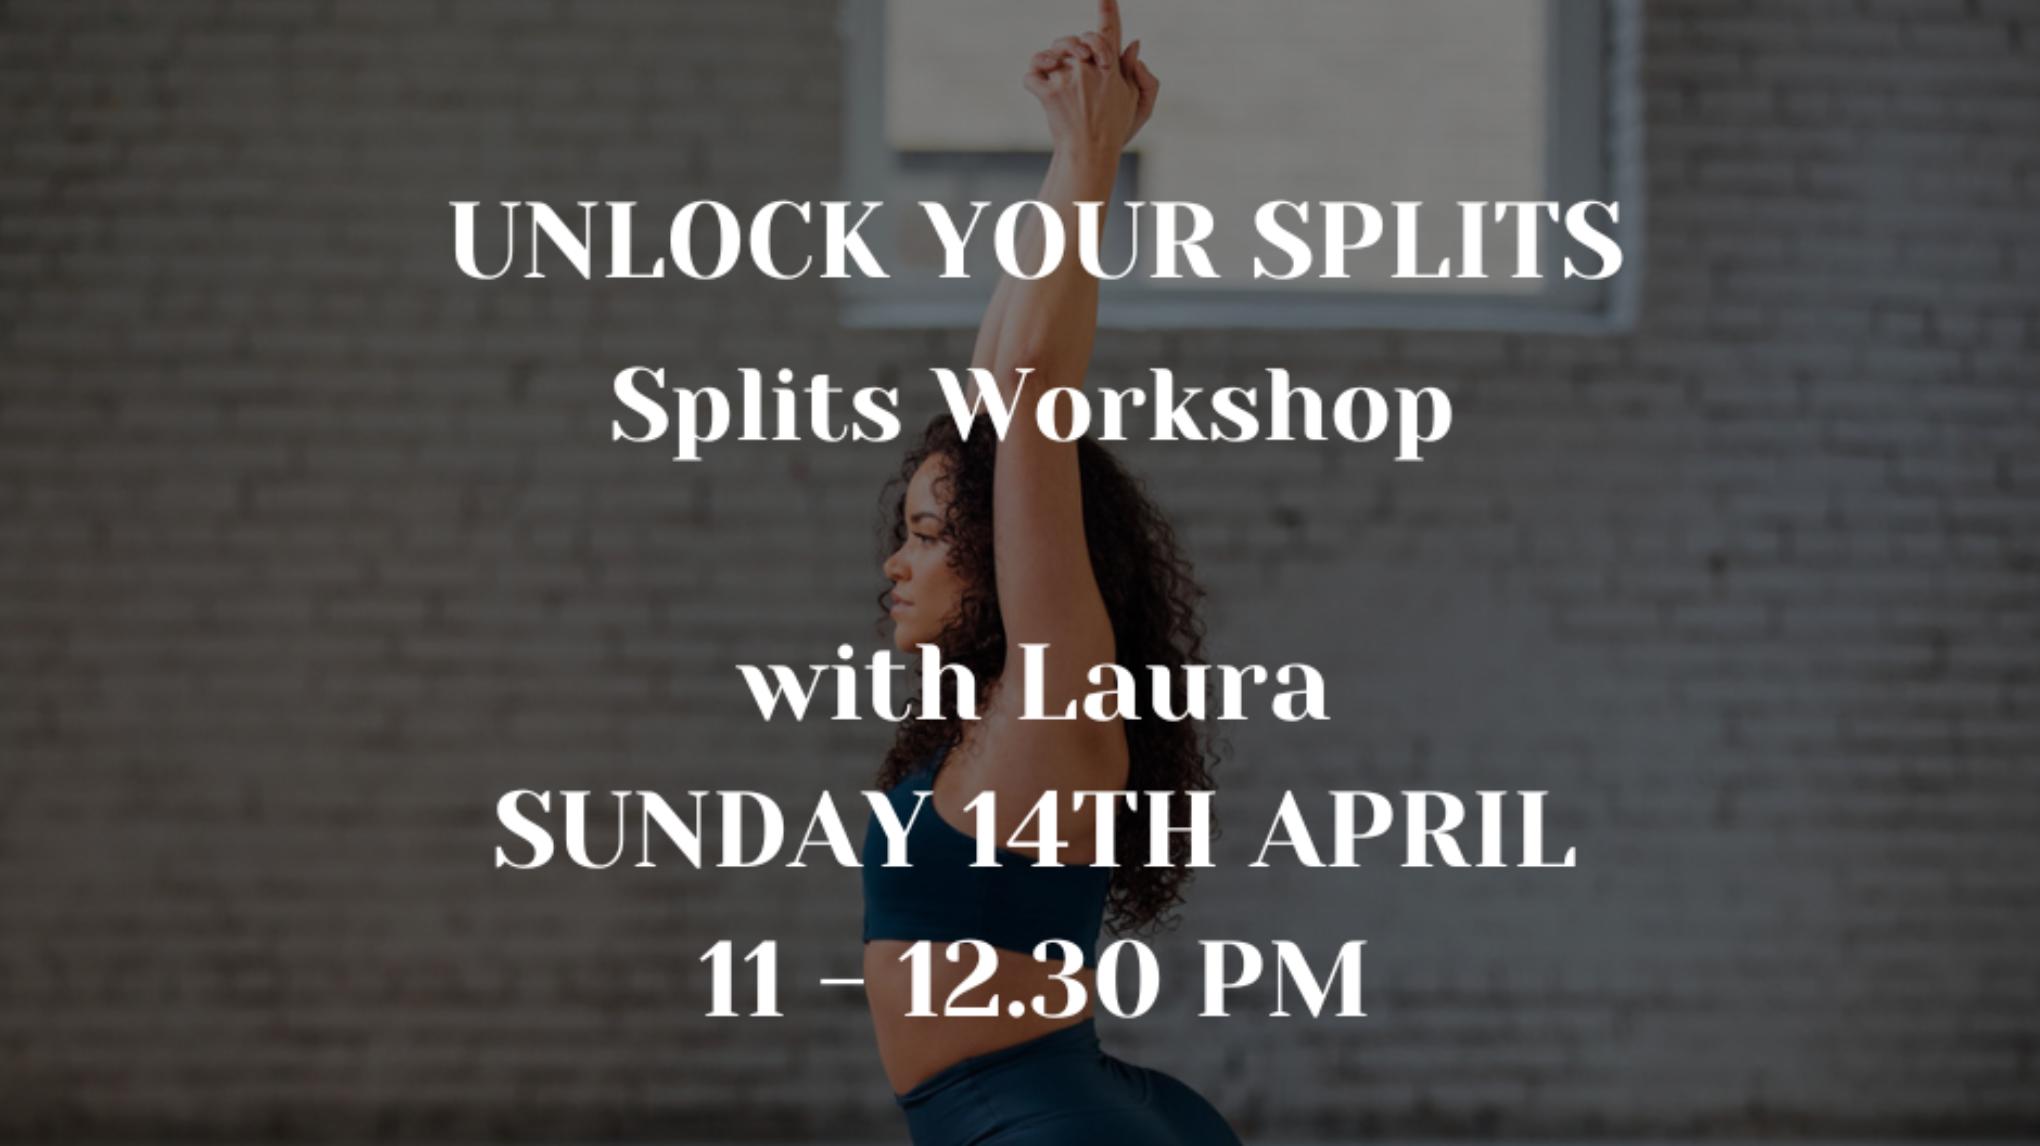 UNLOCK YOUR SPLITS: Splits Workshop